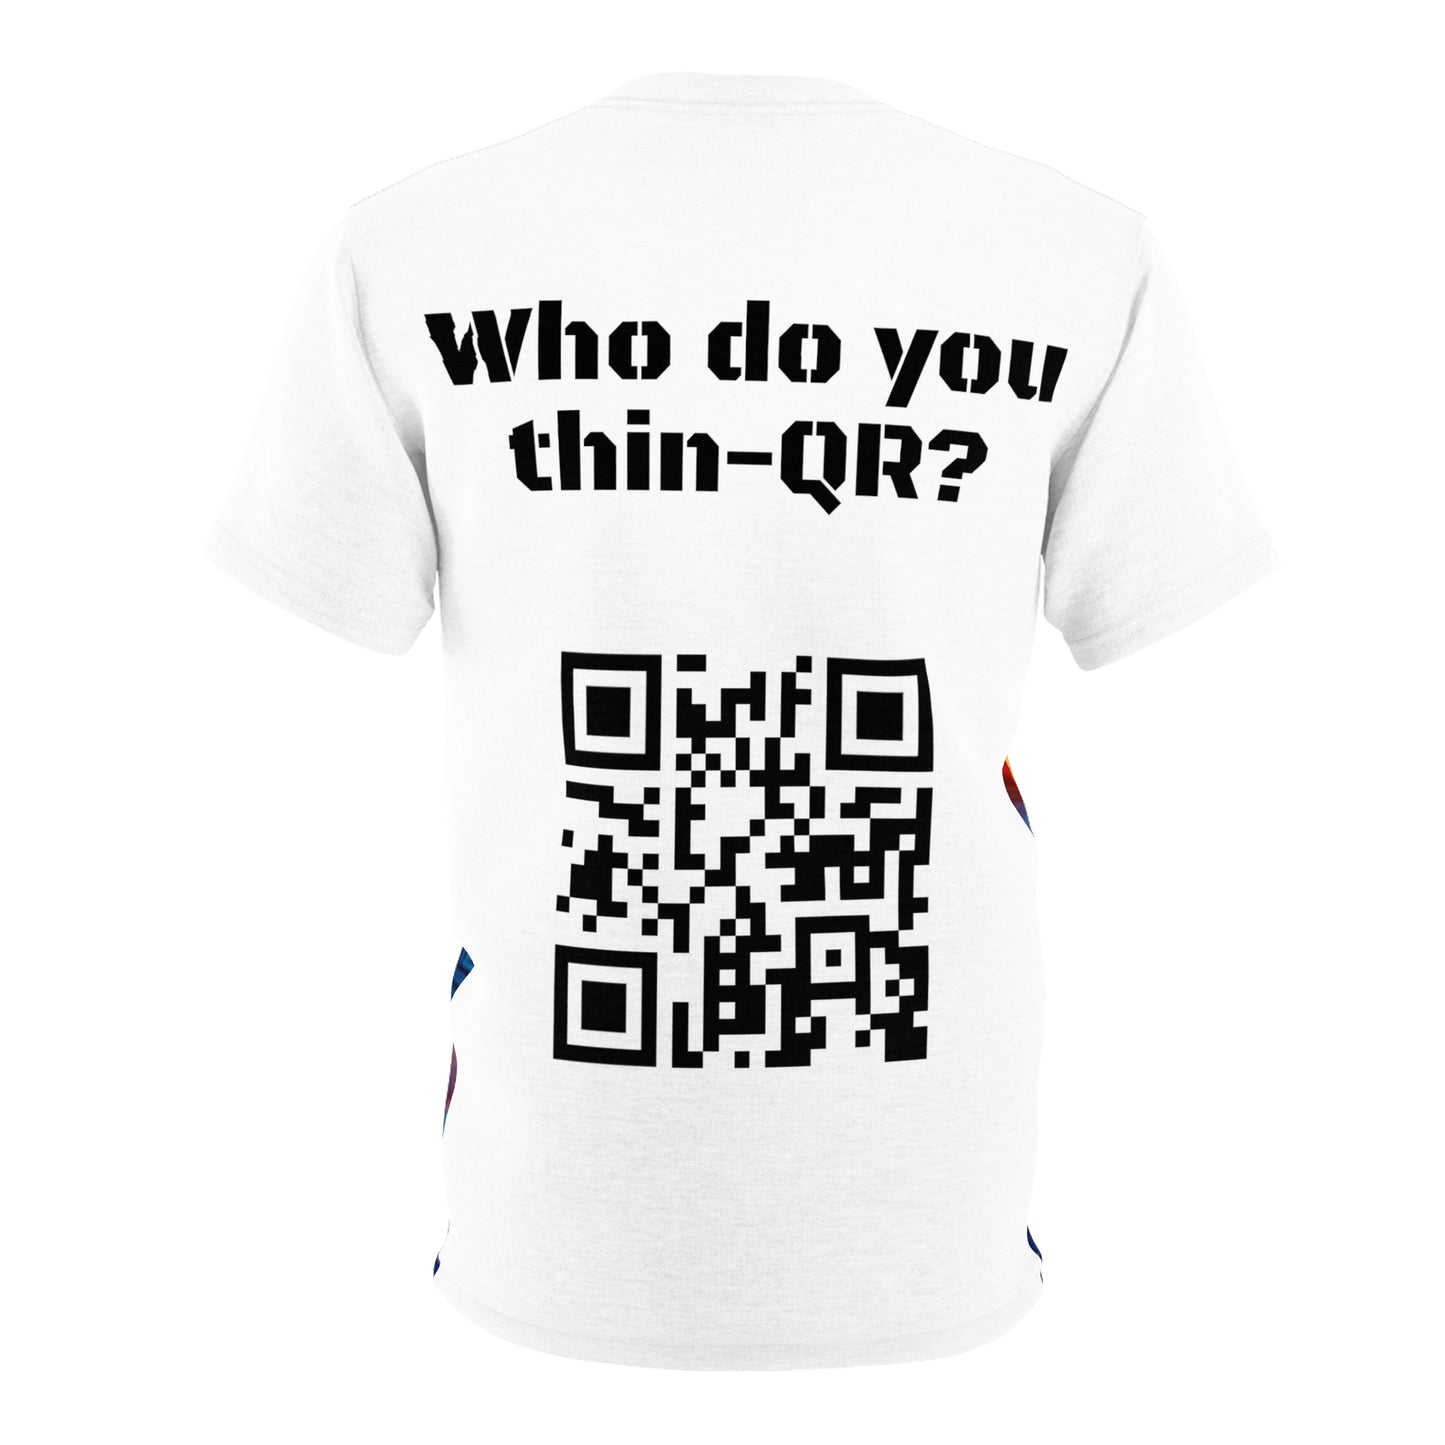 Who do you thin-QR?